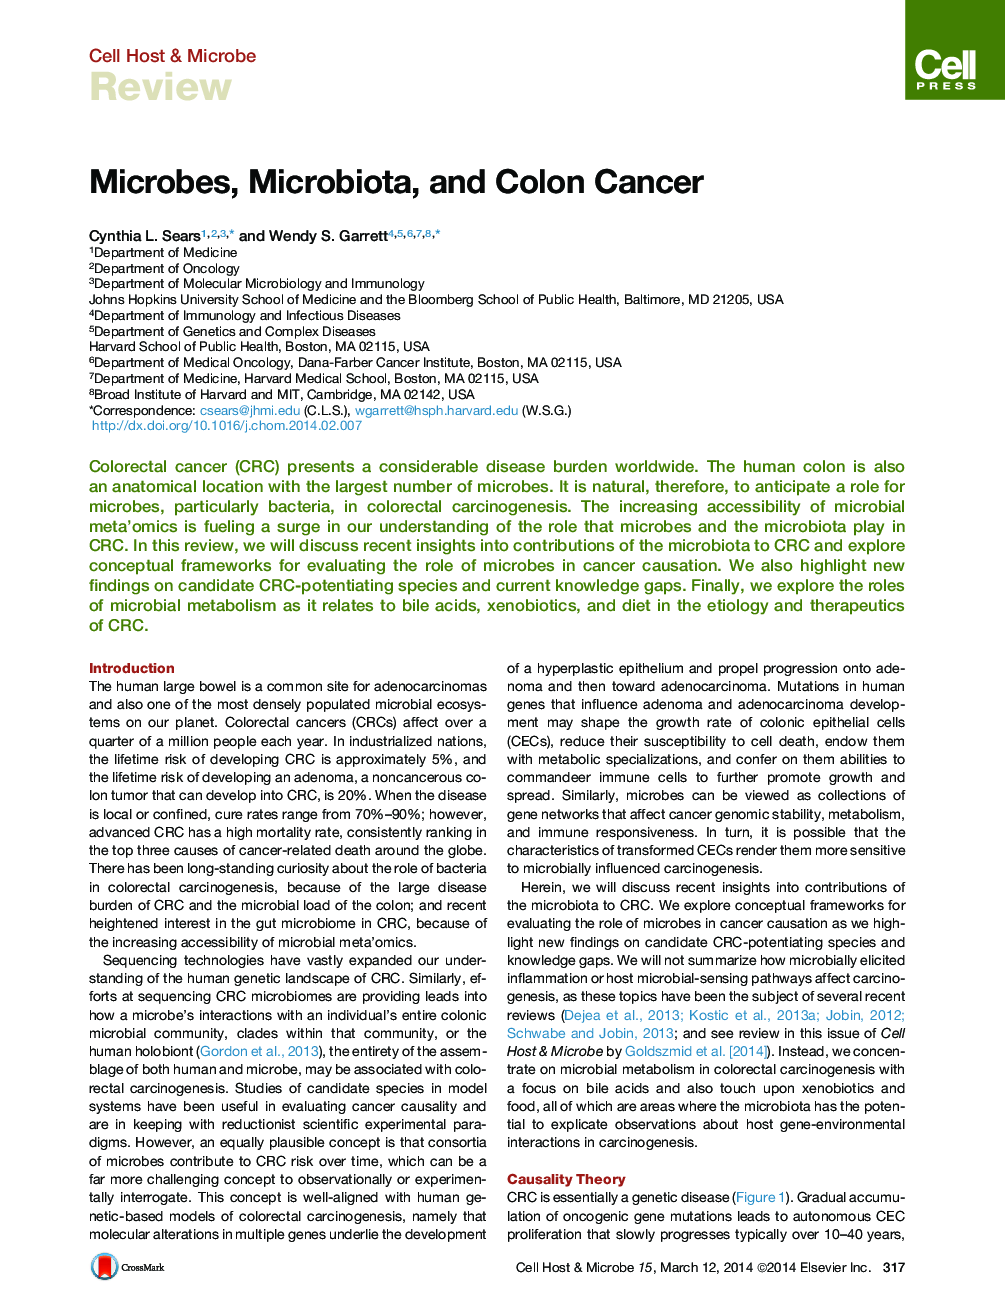 Microbes, Microbiota, and Colon Cancer